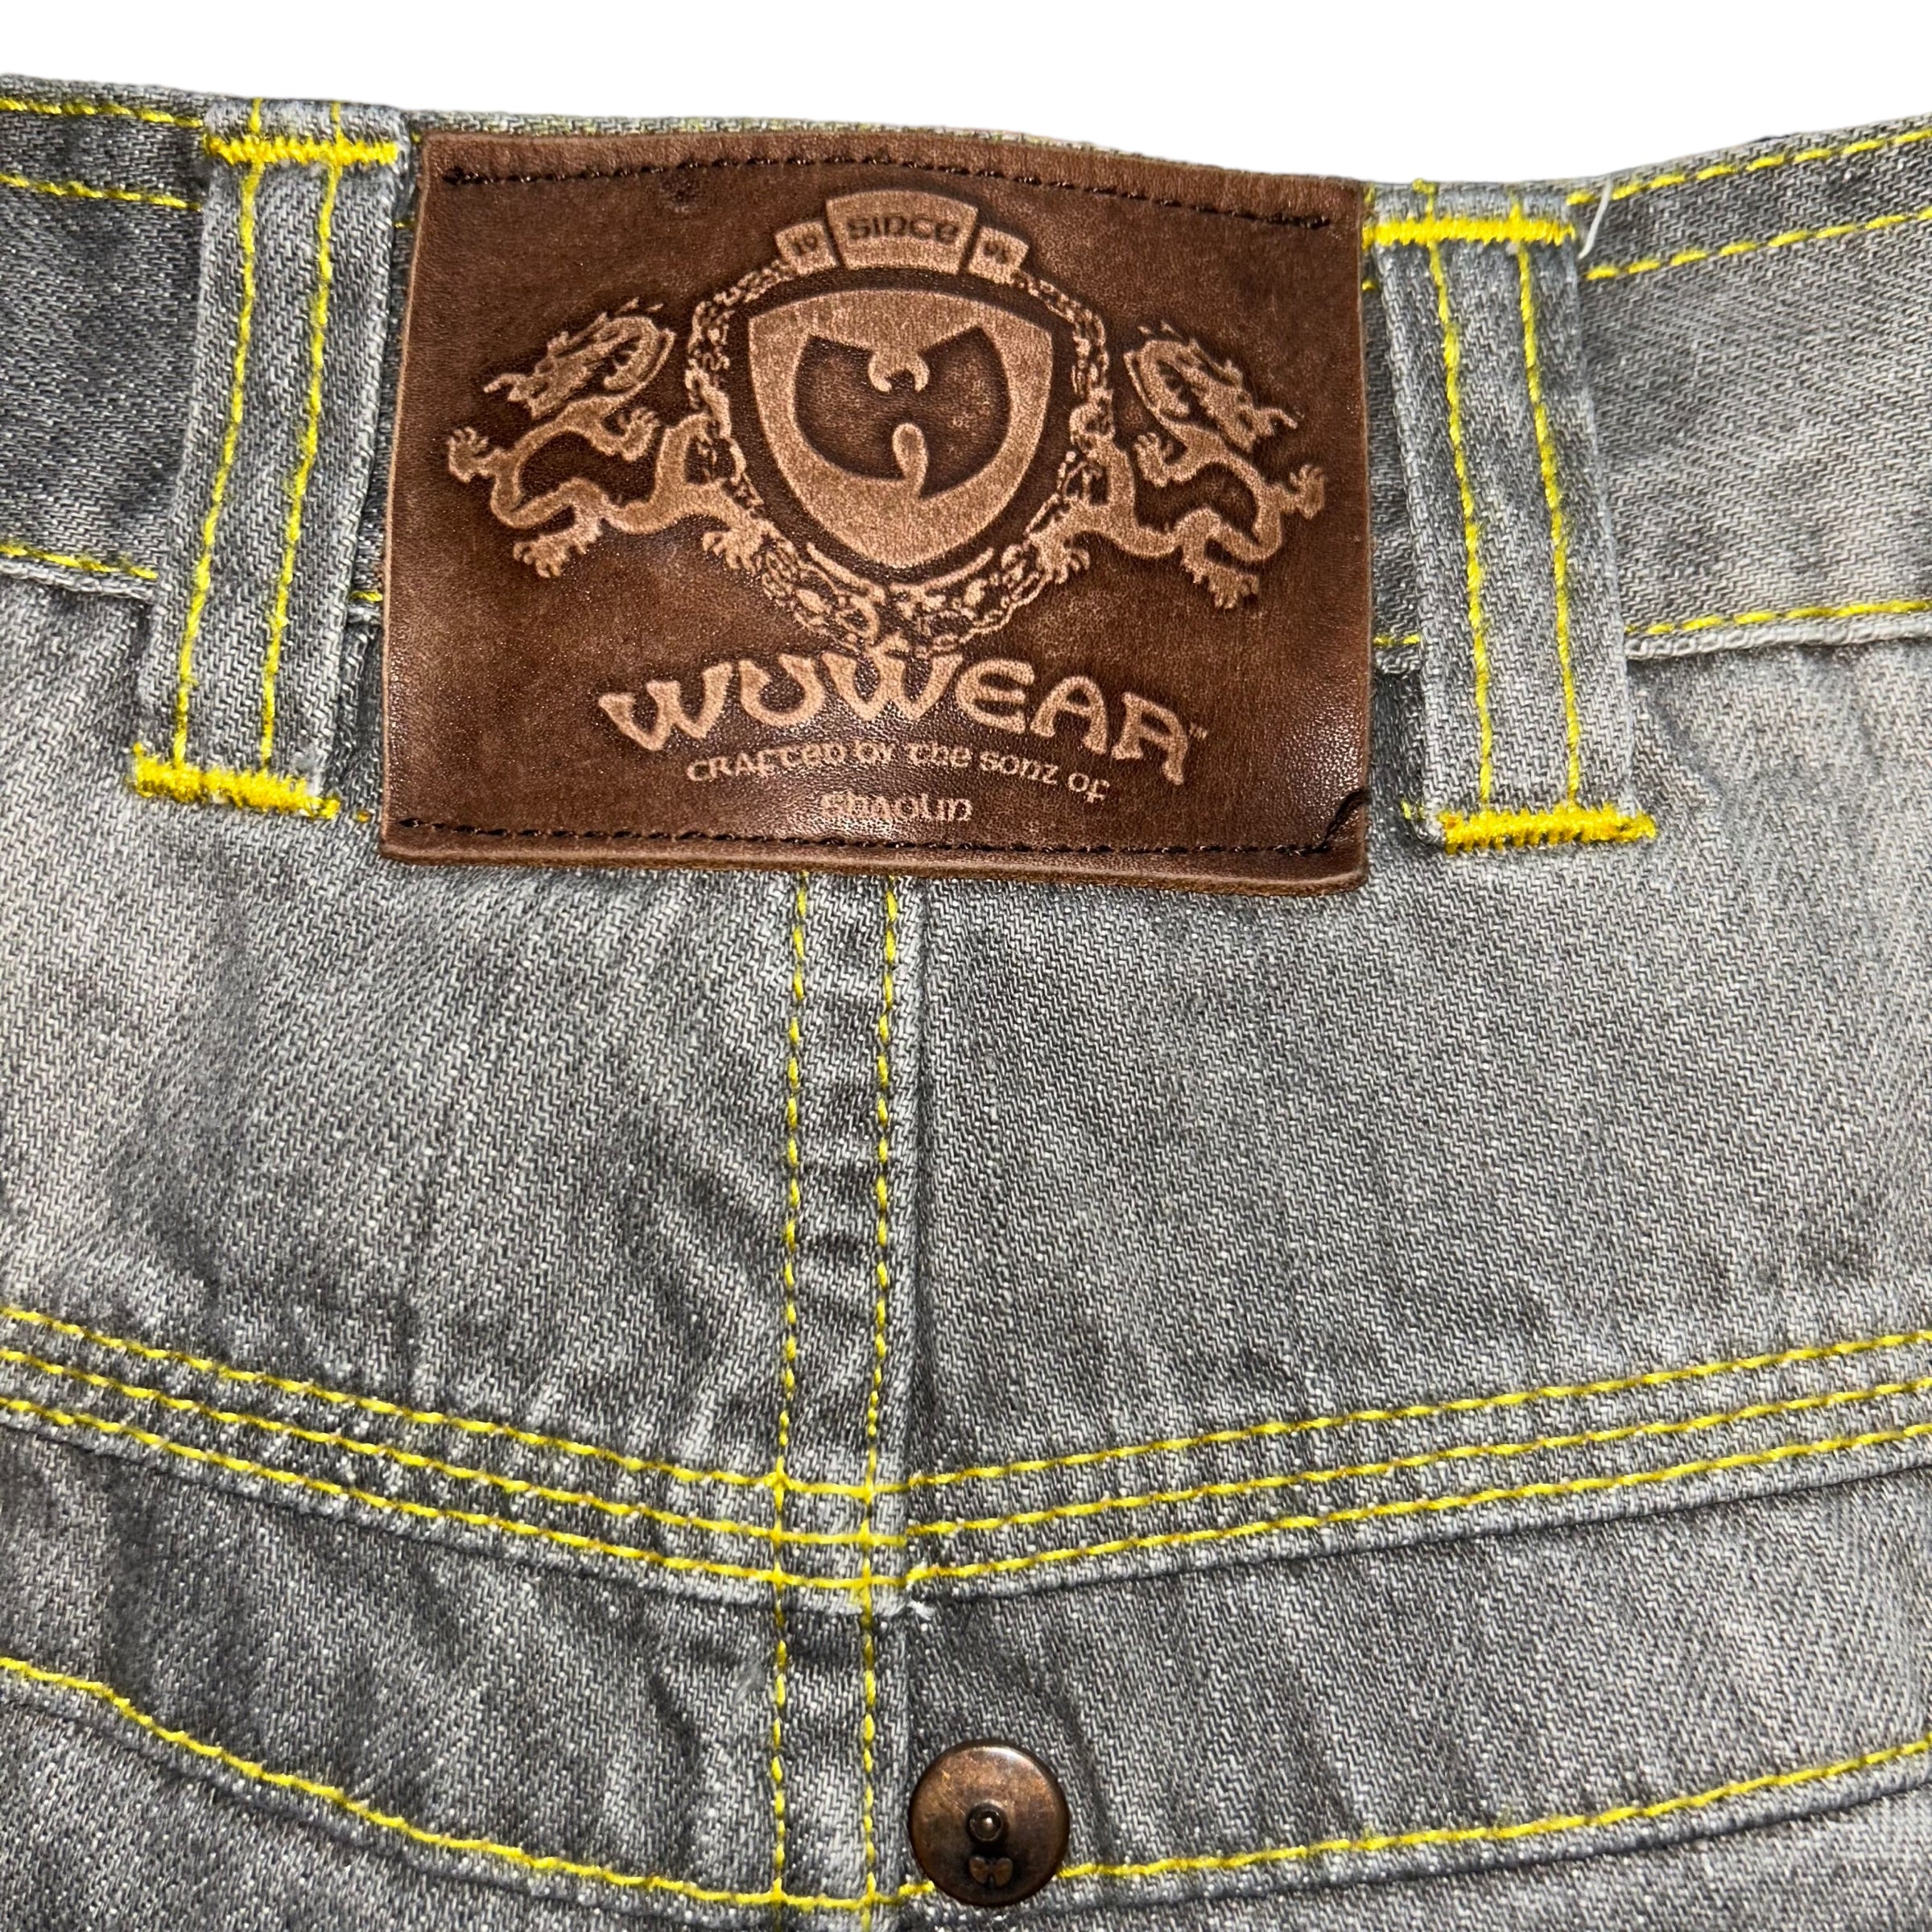 Baggy Shorts Wu-Wear Wutang Clan Vintage (32 USA  L)